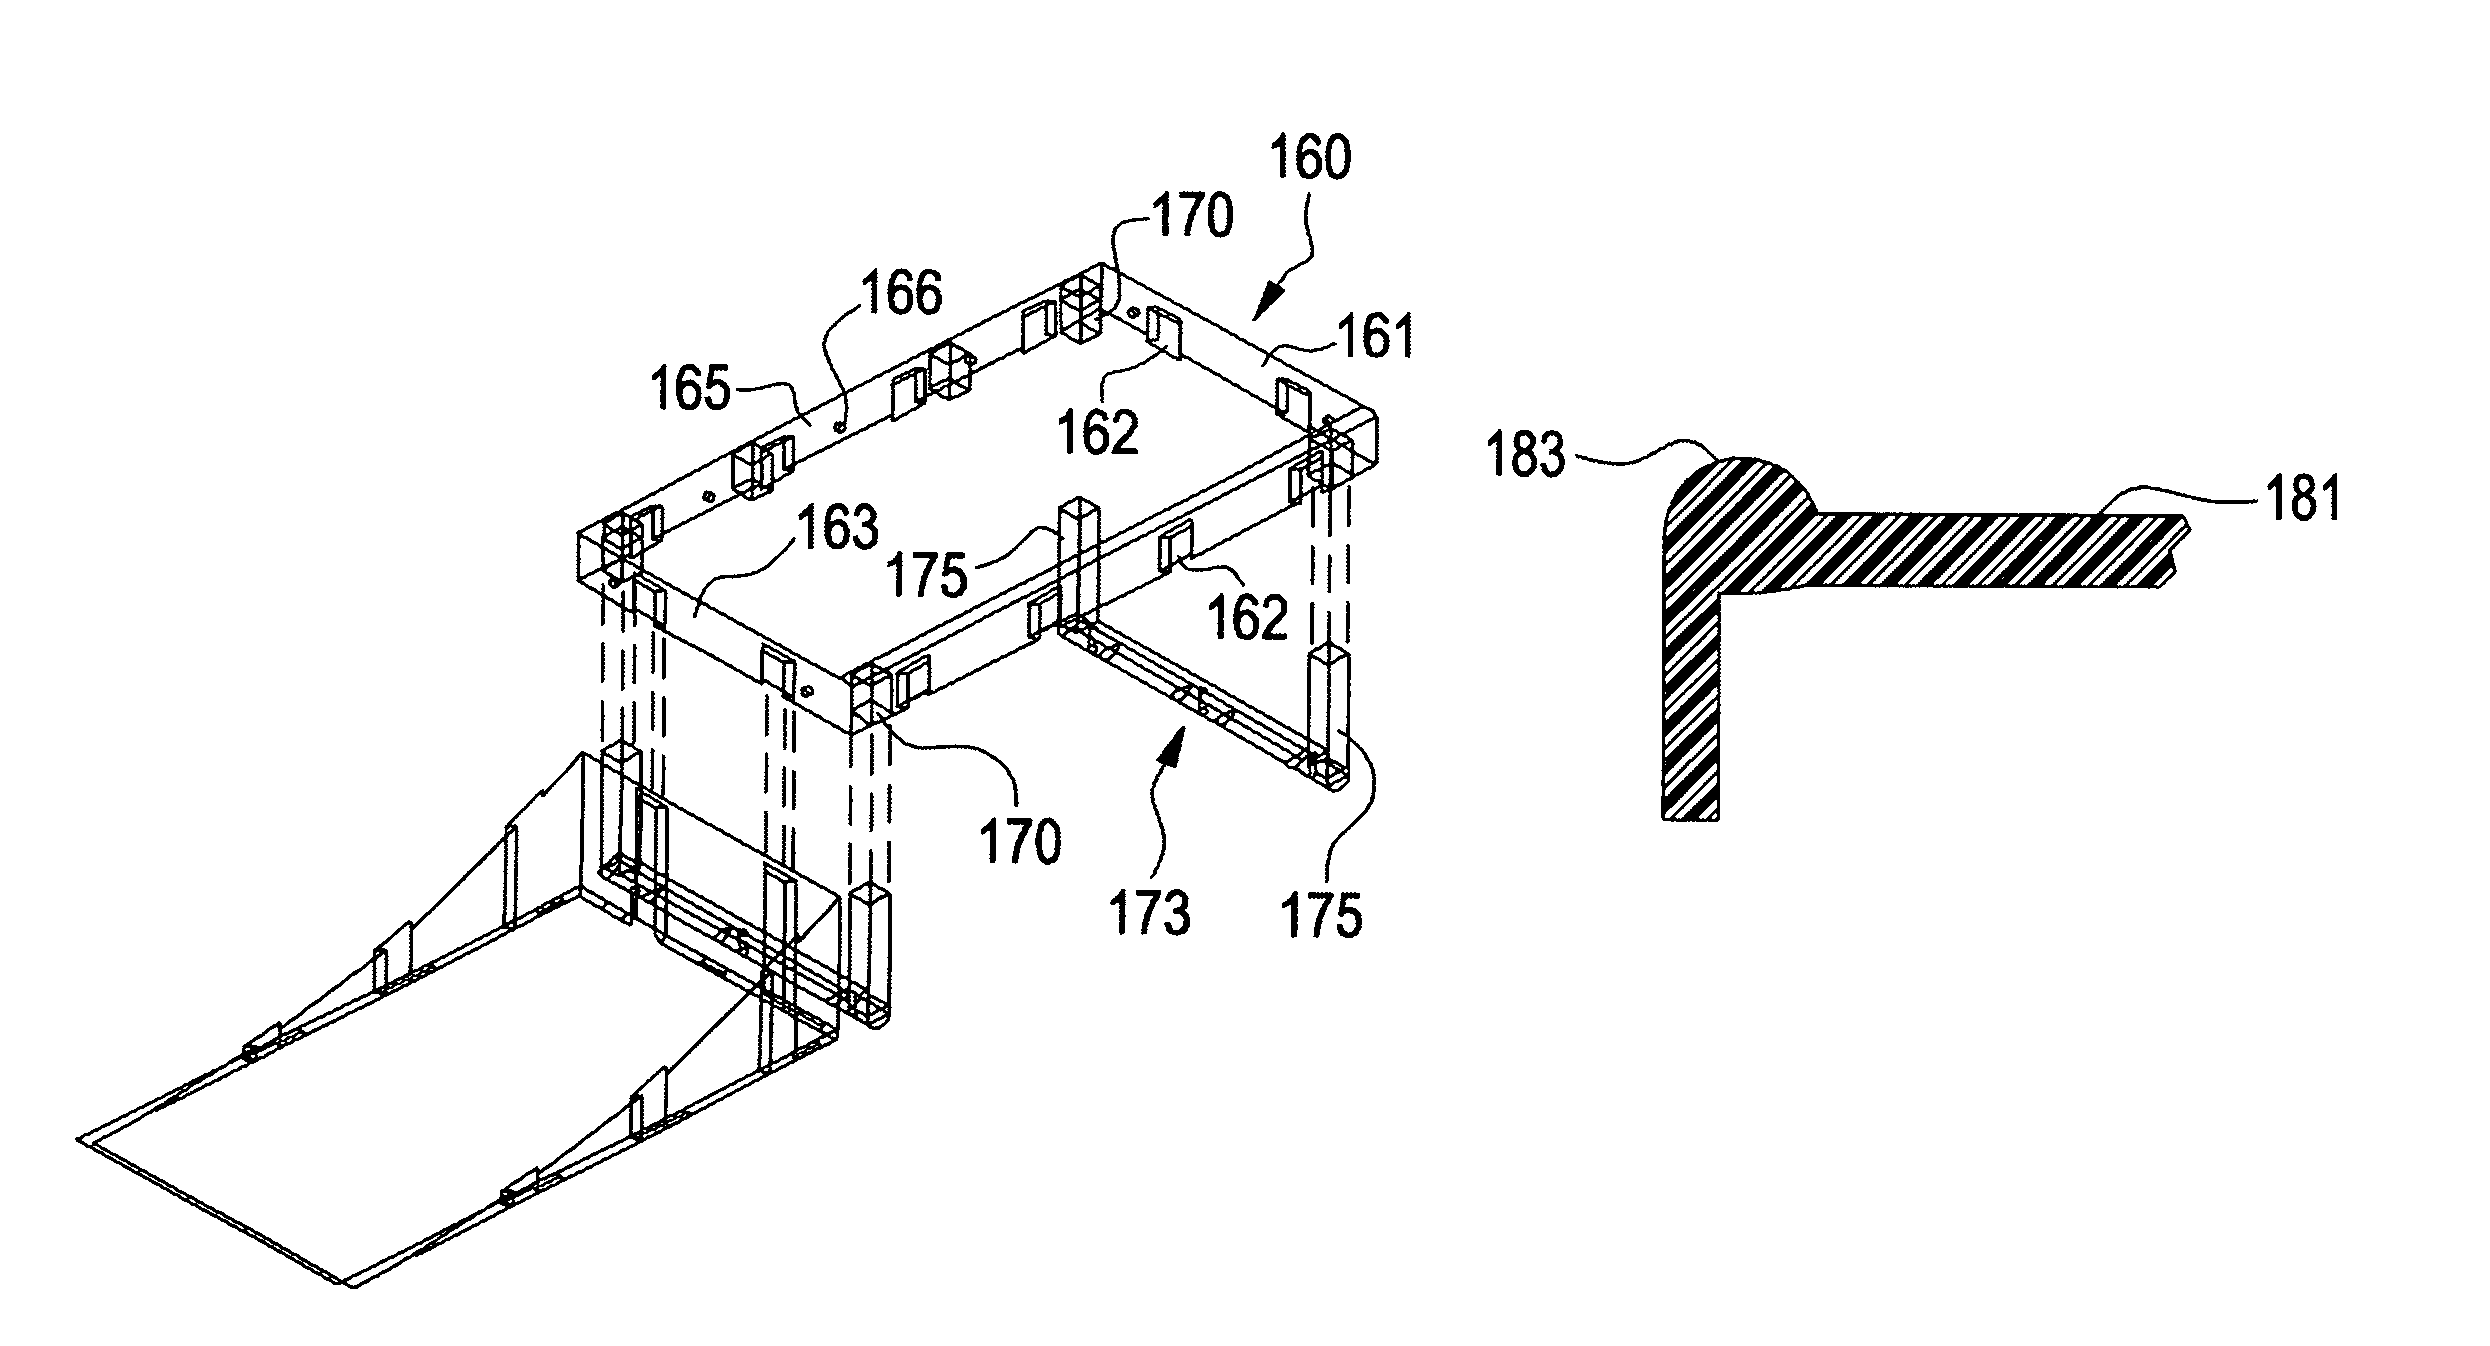 Modular ramp system